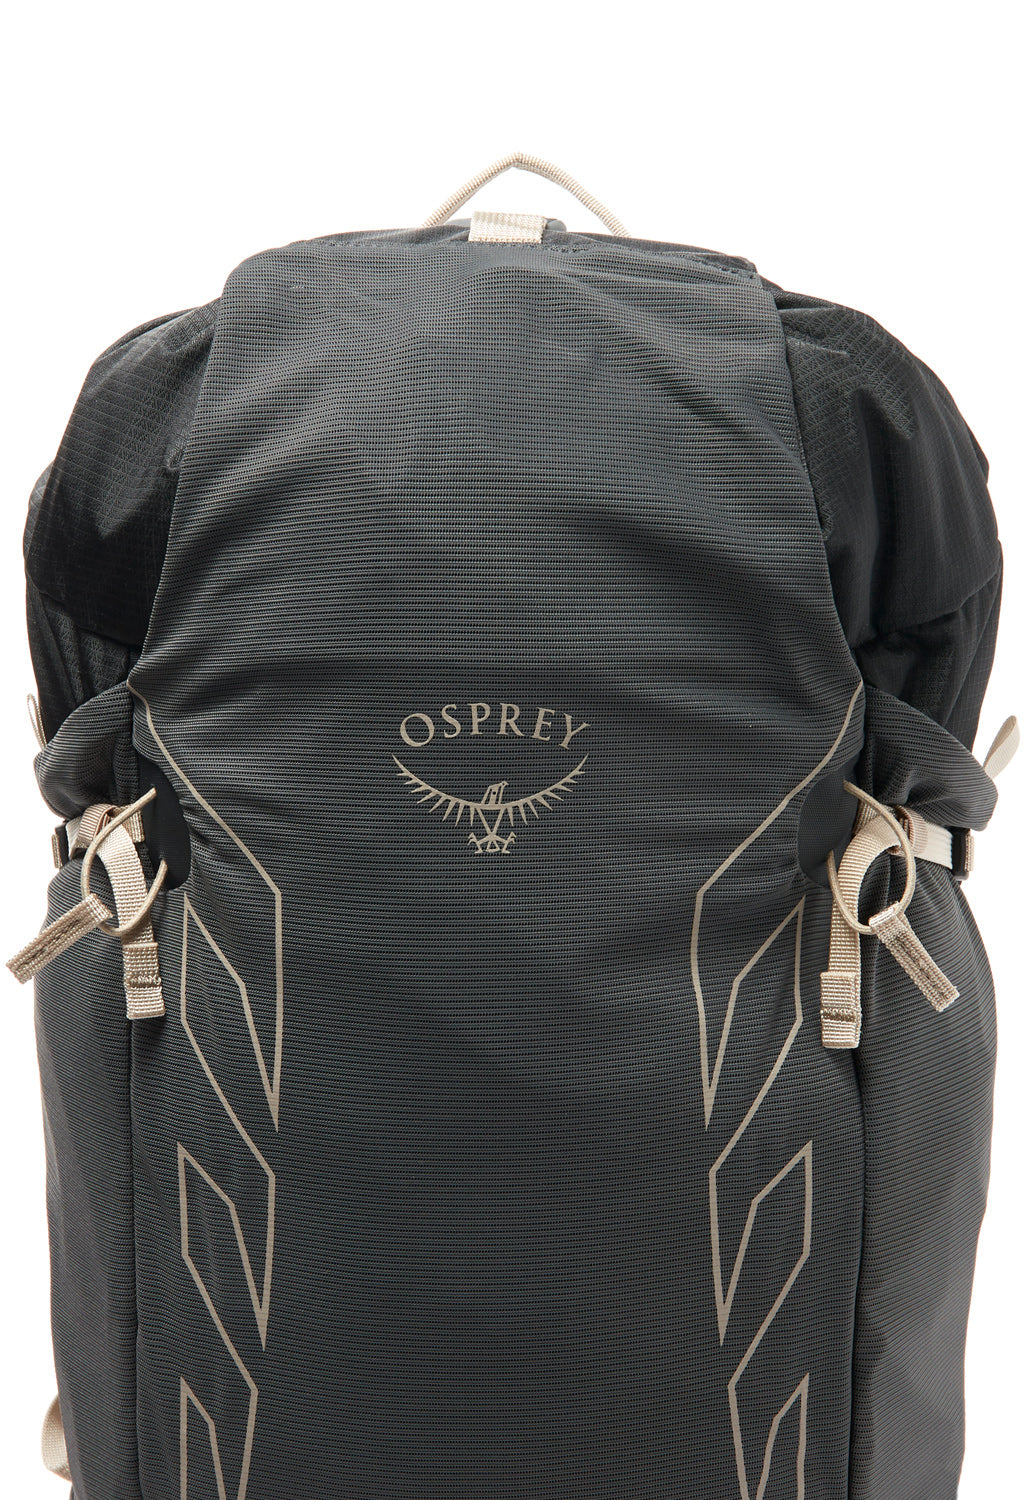 Osprey Tempest Velocity 20 - Dark Charcoal / Chiru Tan